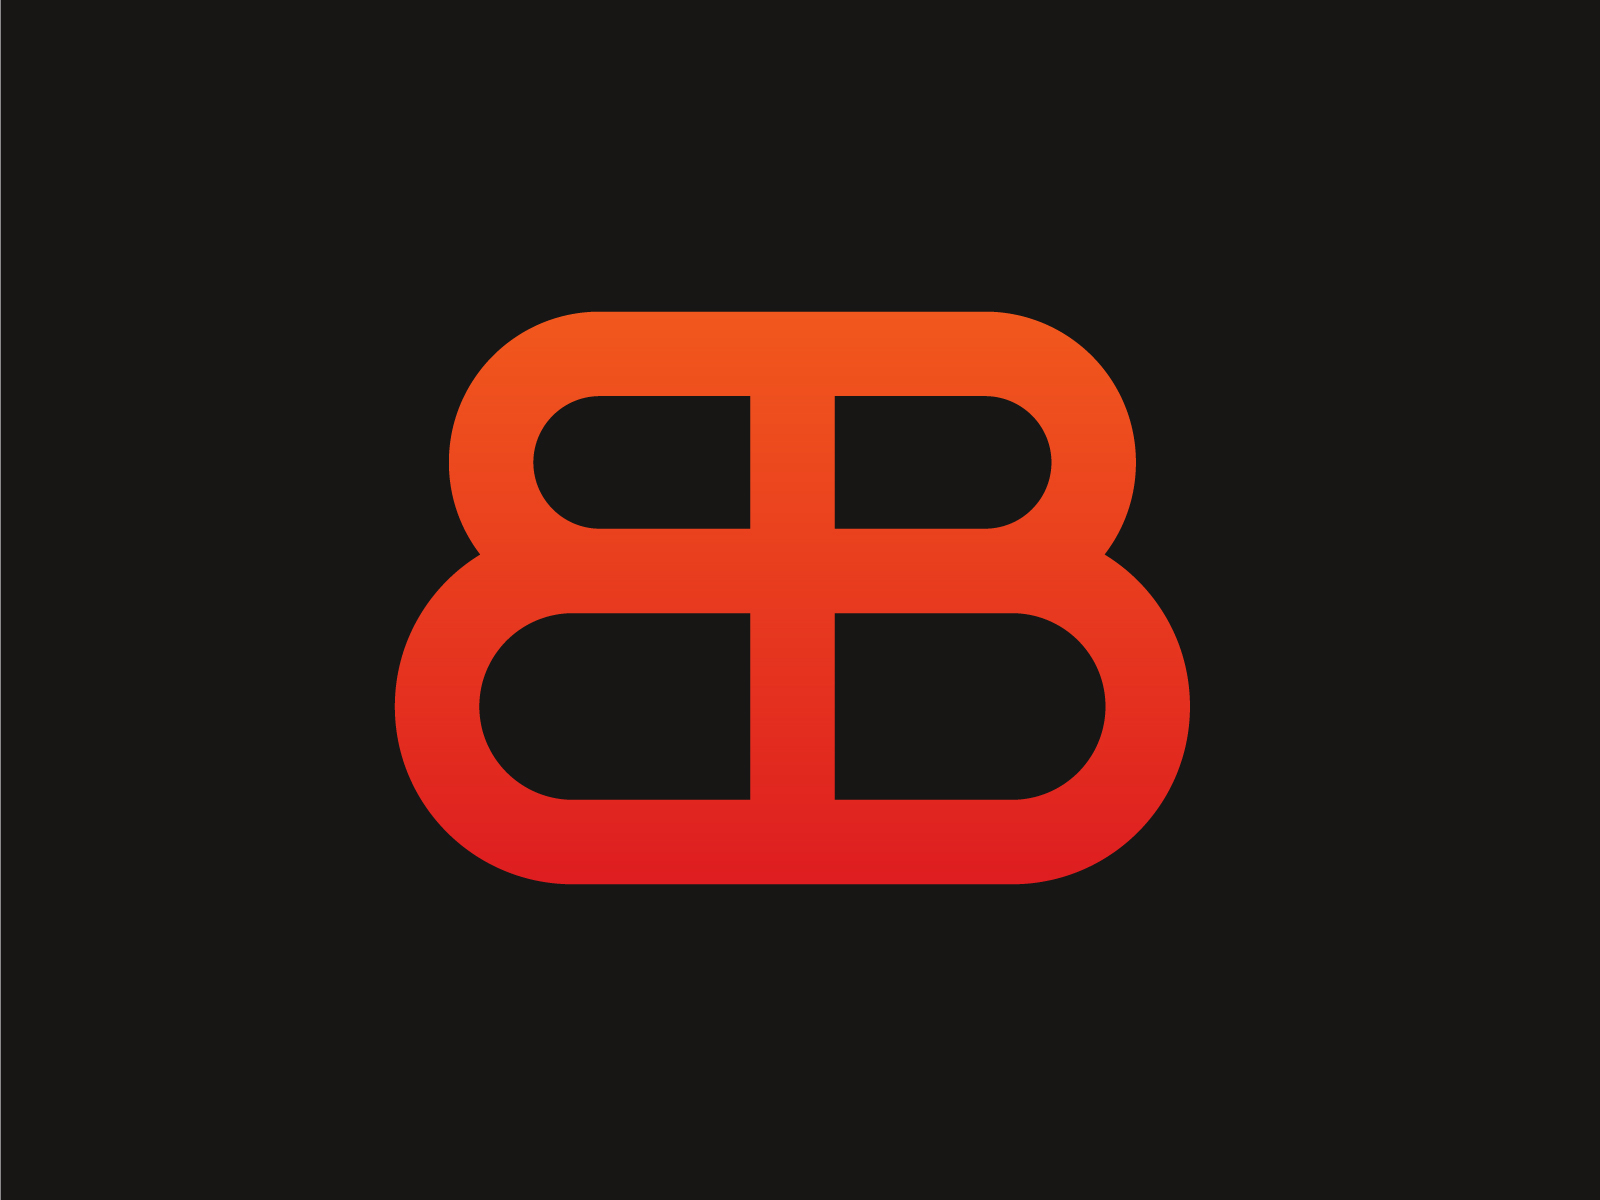 bb-monogram-logo-by-kh-studio-on-dribbble